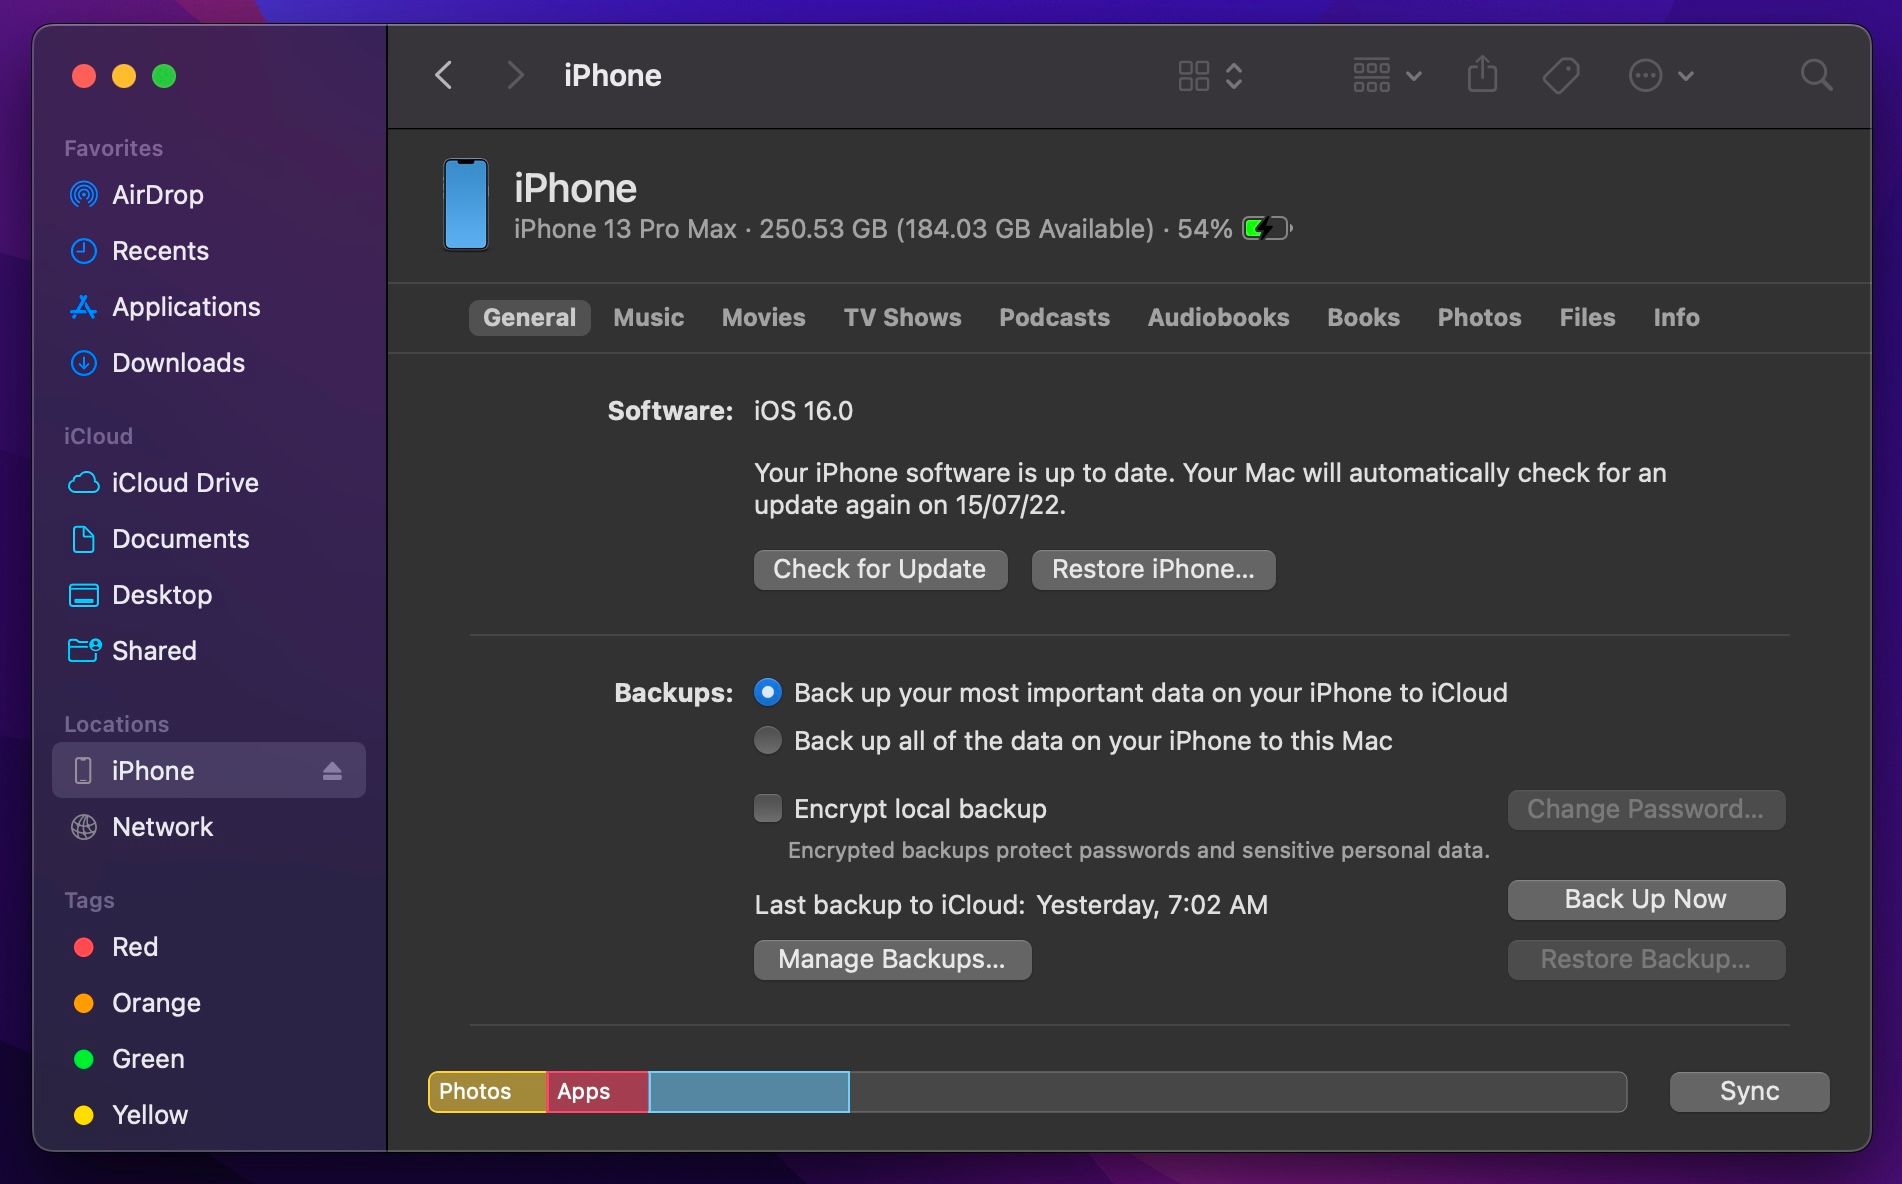 Penemu di Mac menampilkan ringkasan perangkat iPhone